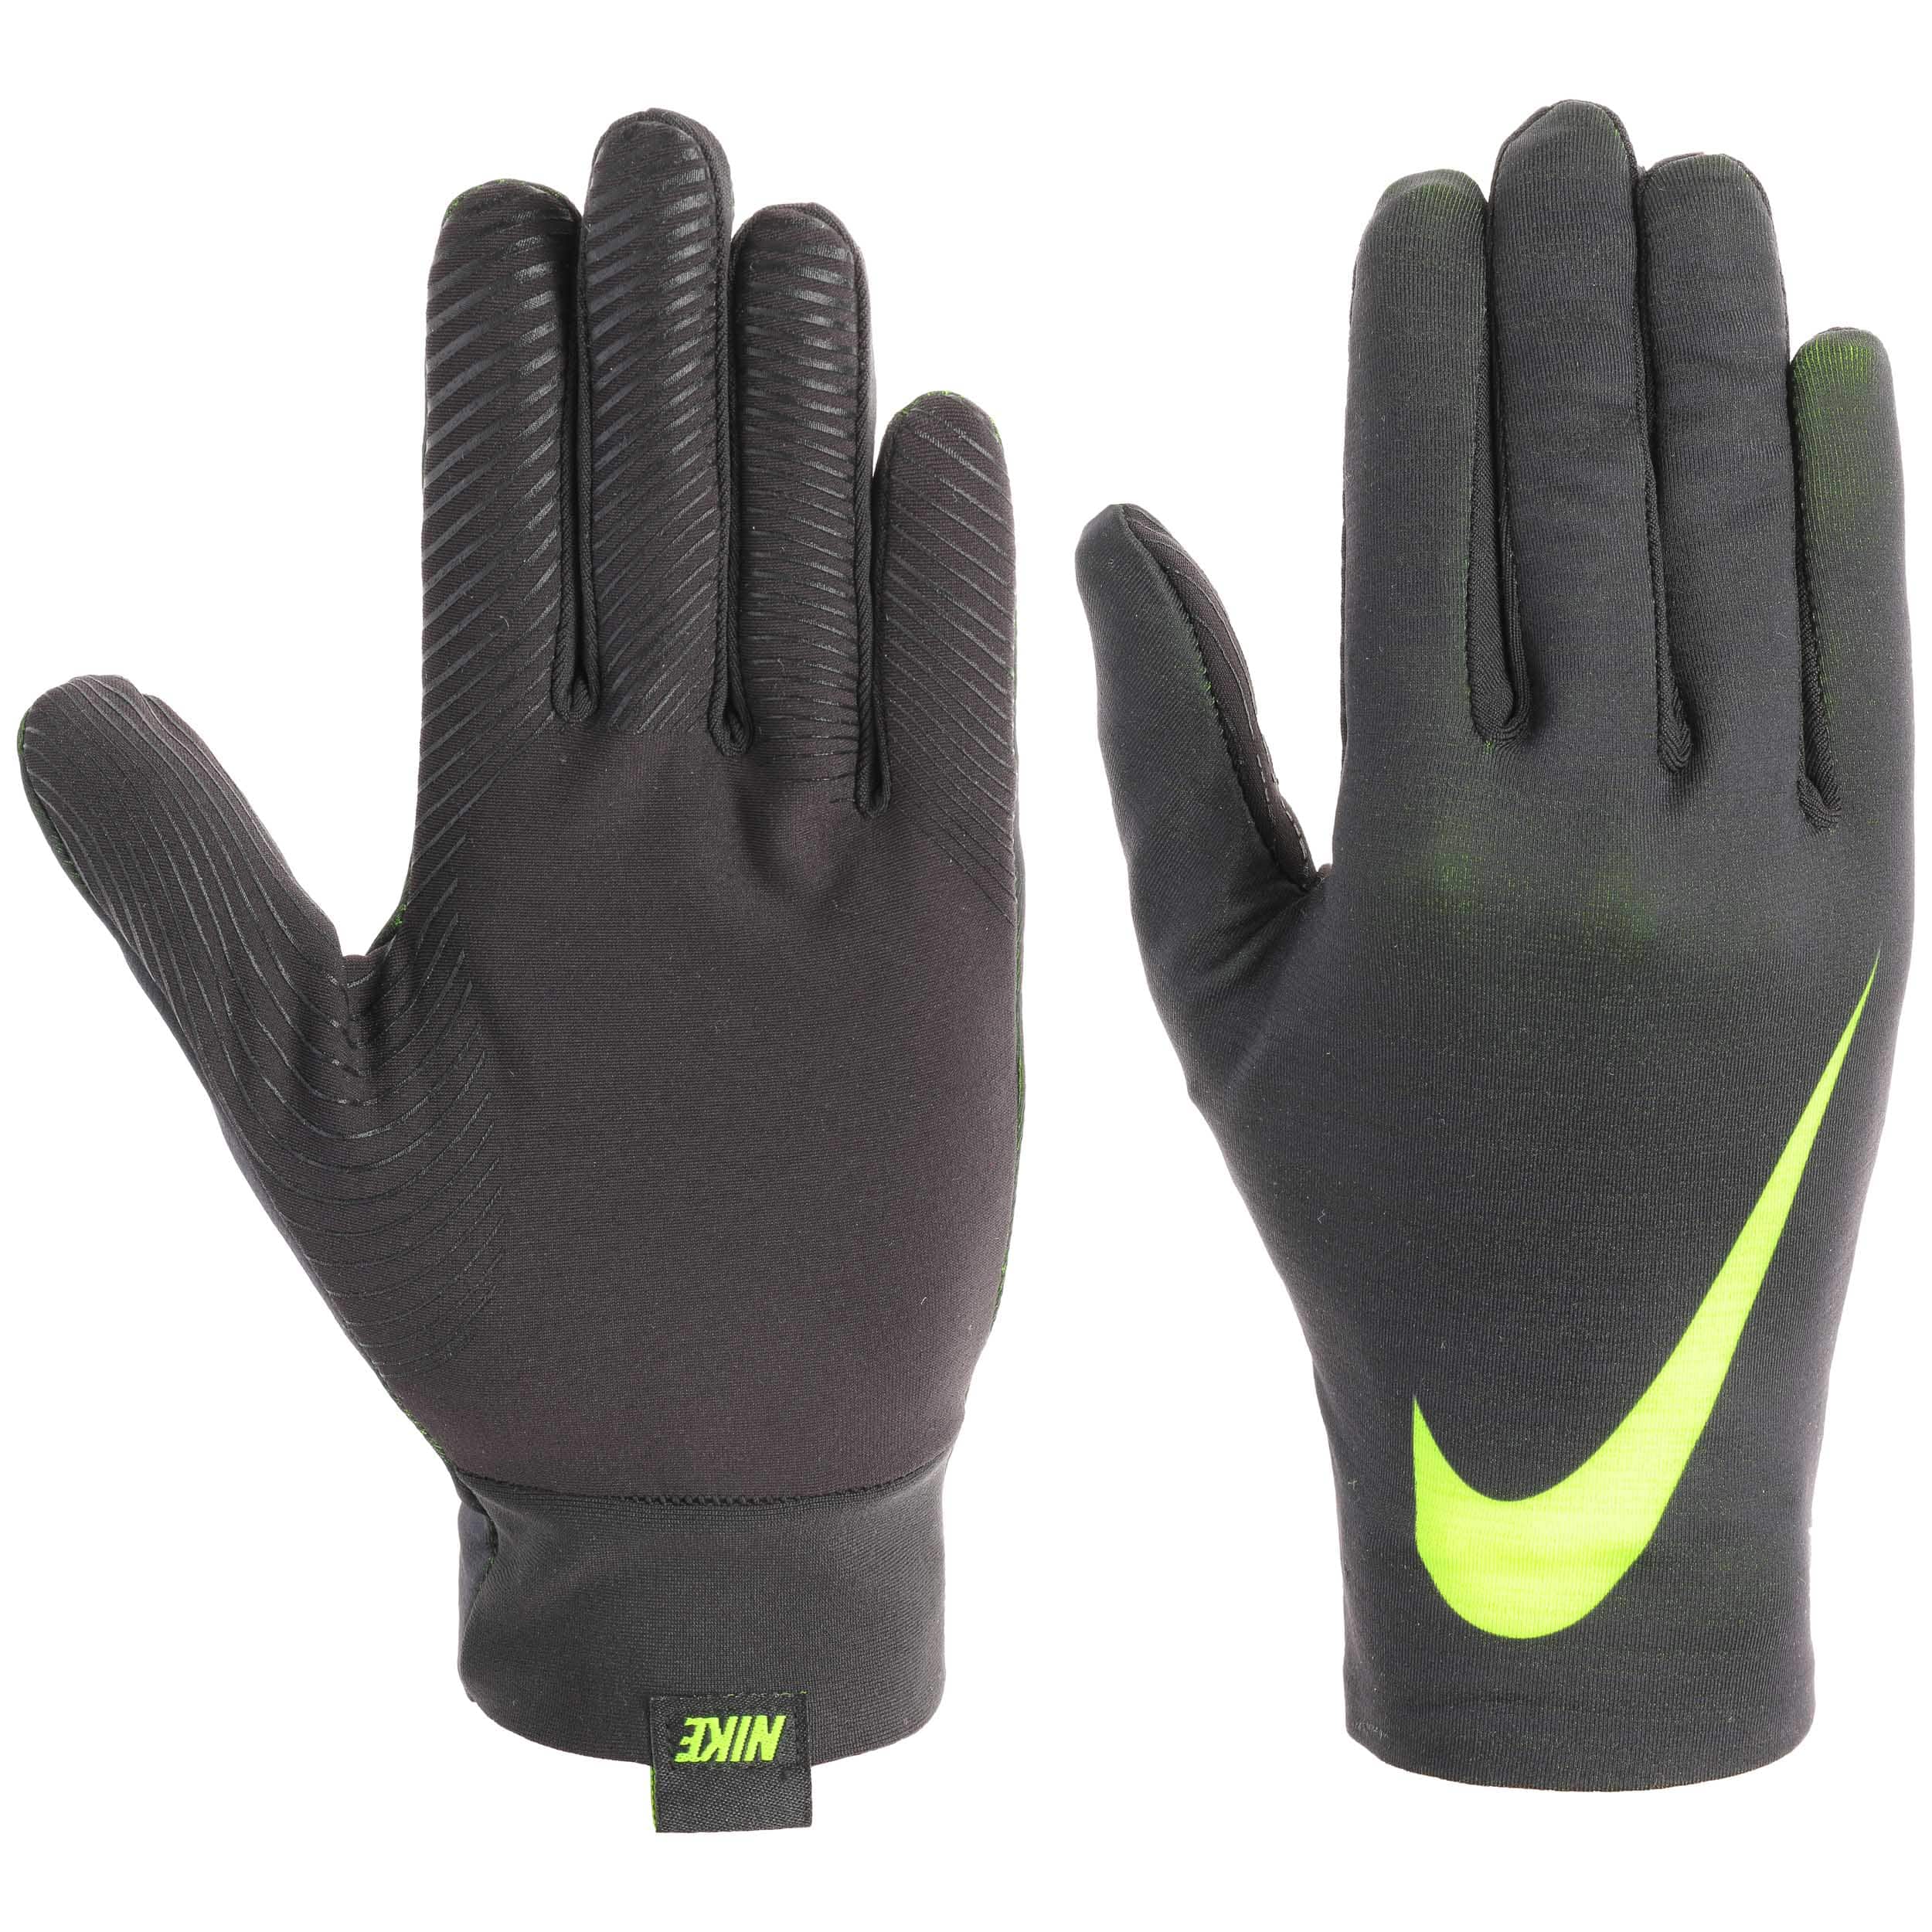 nike touchscreen gloves